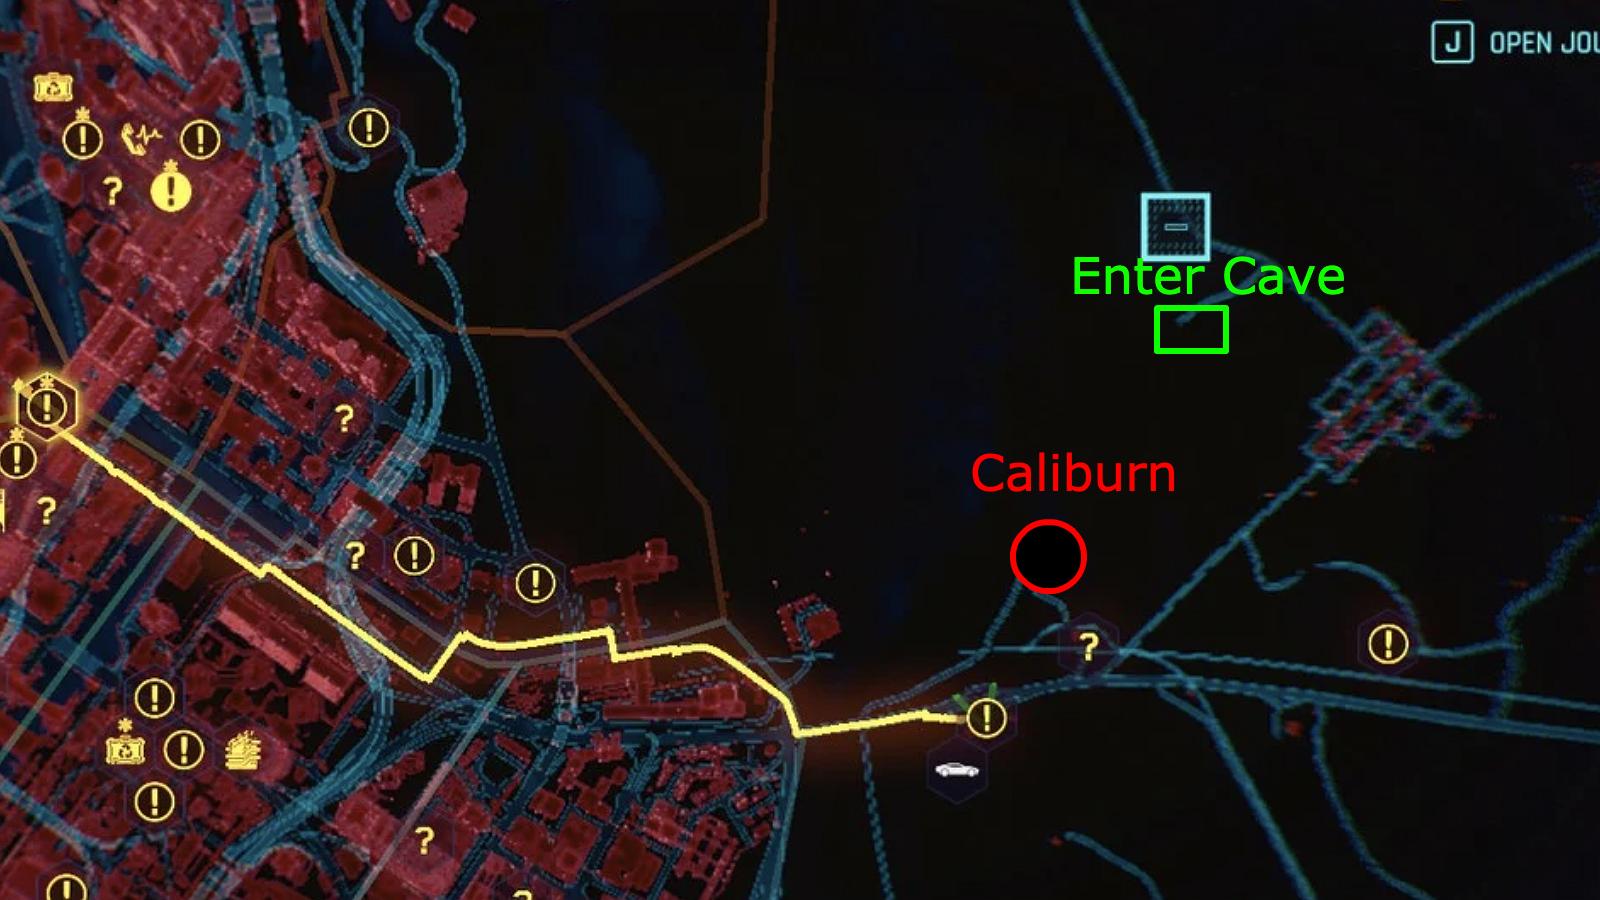 Cyberpunk map for Caliburn location